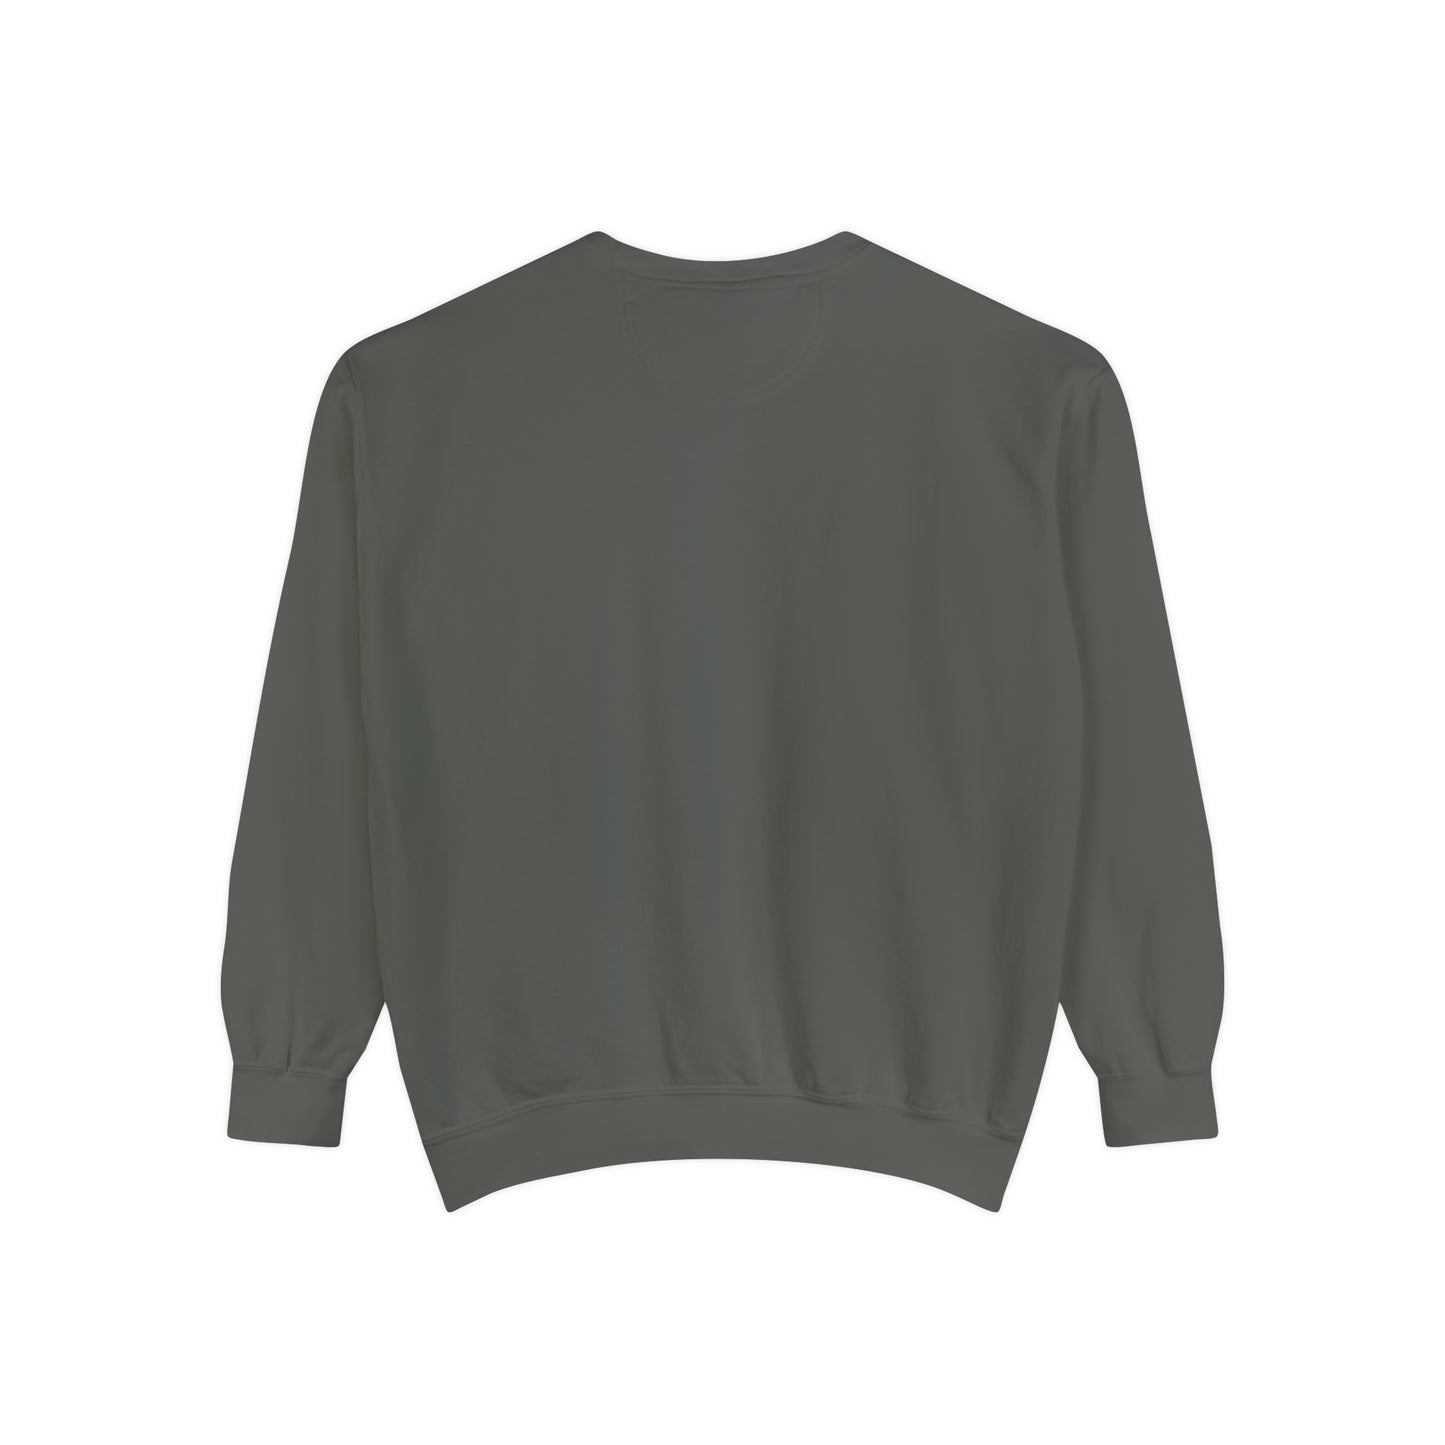 HAPPY NEW YEAR SWEATSHIRT Unisex Garment-Dyed Sweatshirt